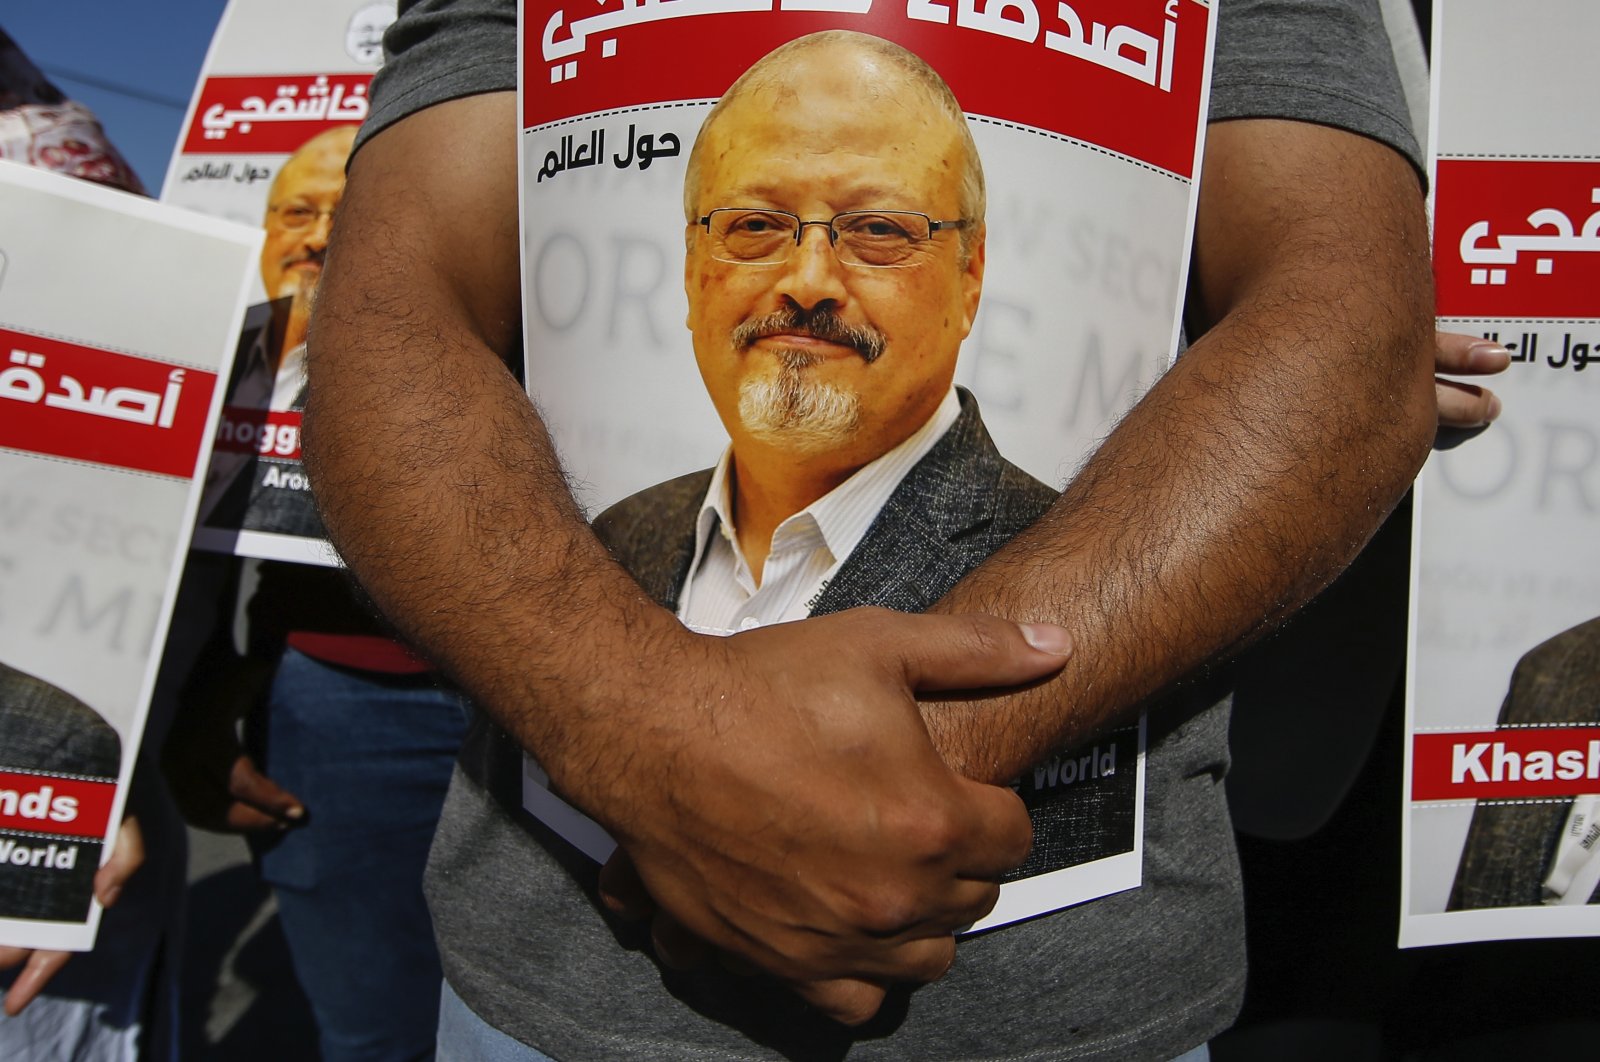 Jaksa Turki meminta pengadilan untuk mentransfer kasus Khashoggi ke Arab Saudi